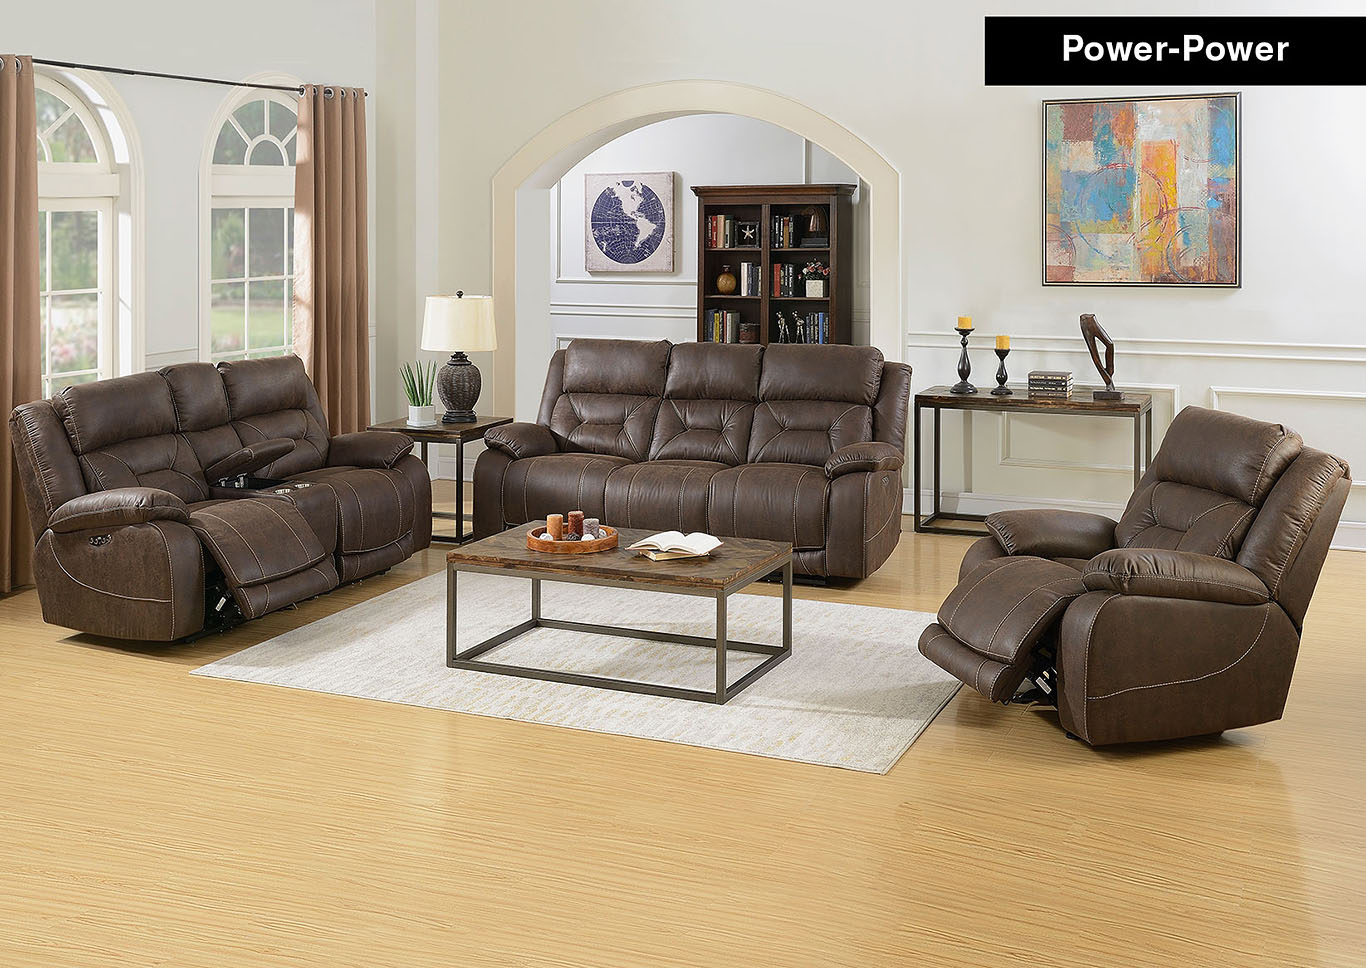 Aria Saddle Brown Power-2 Recliner Sofa, Armchair & Loveseat,Steve Silver